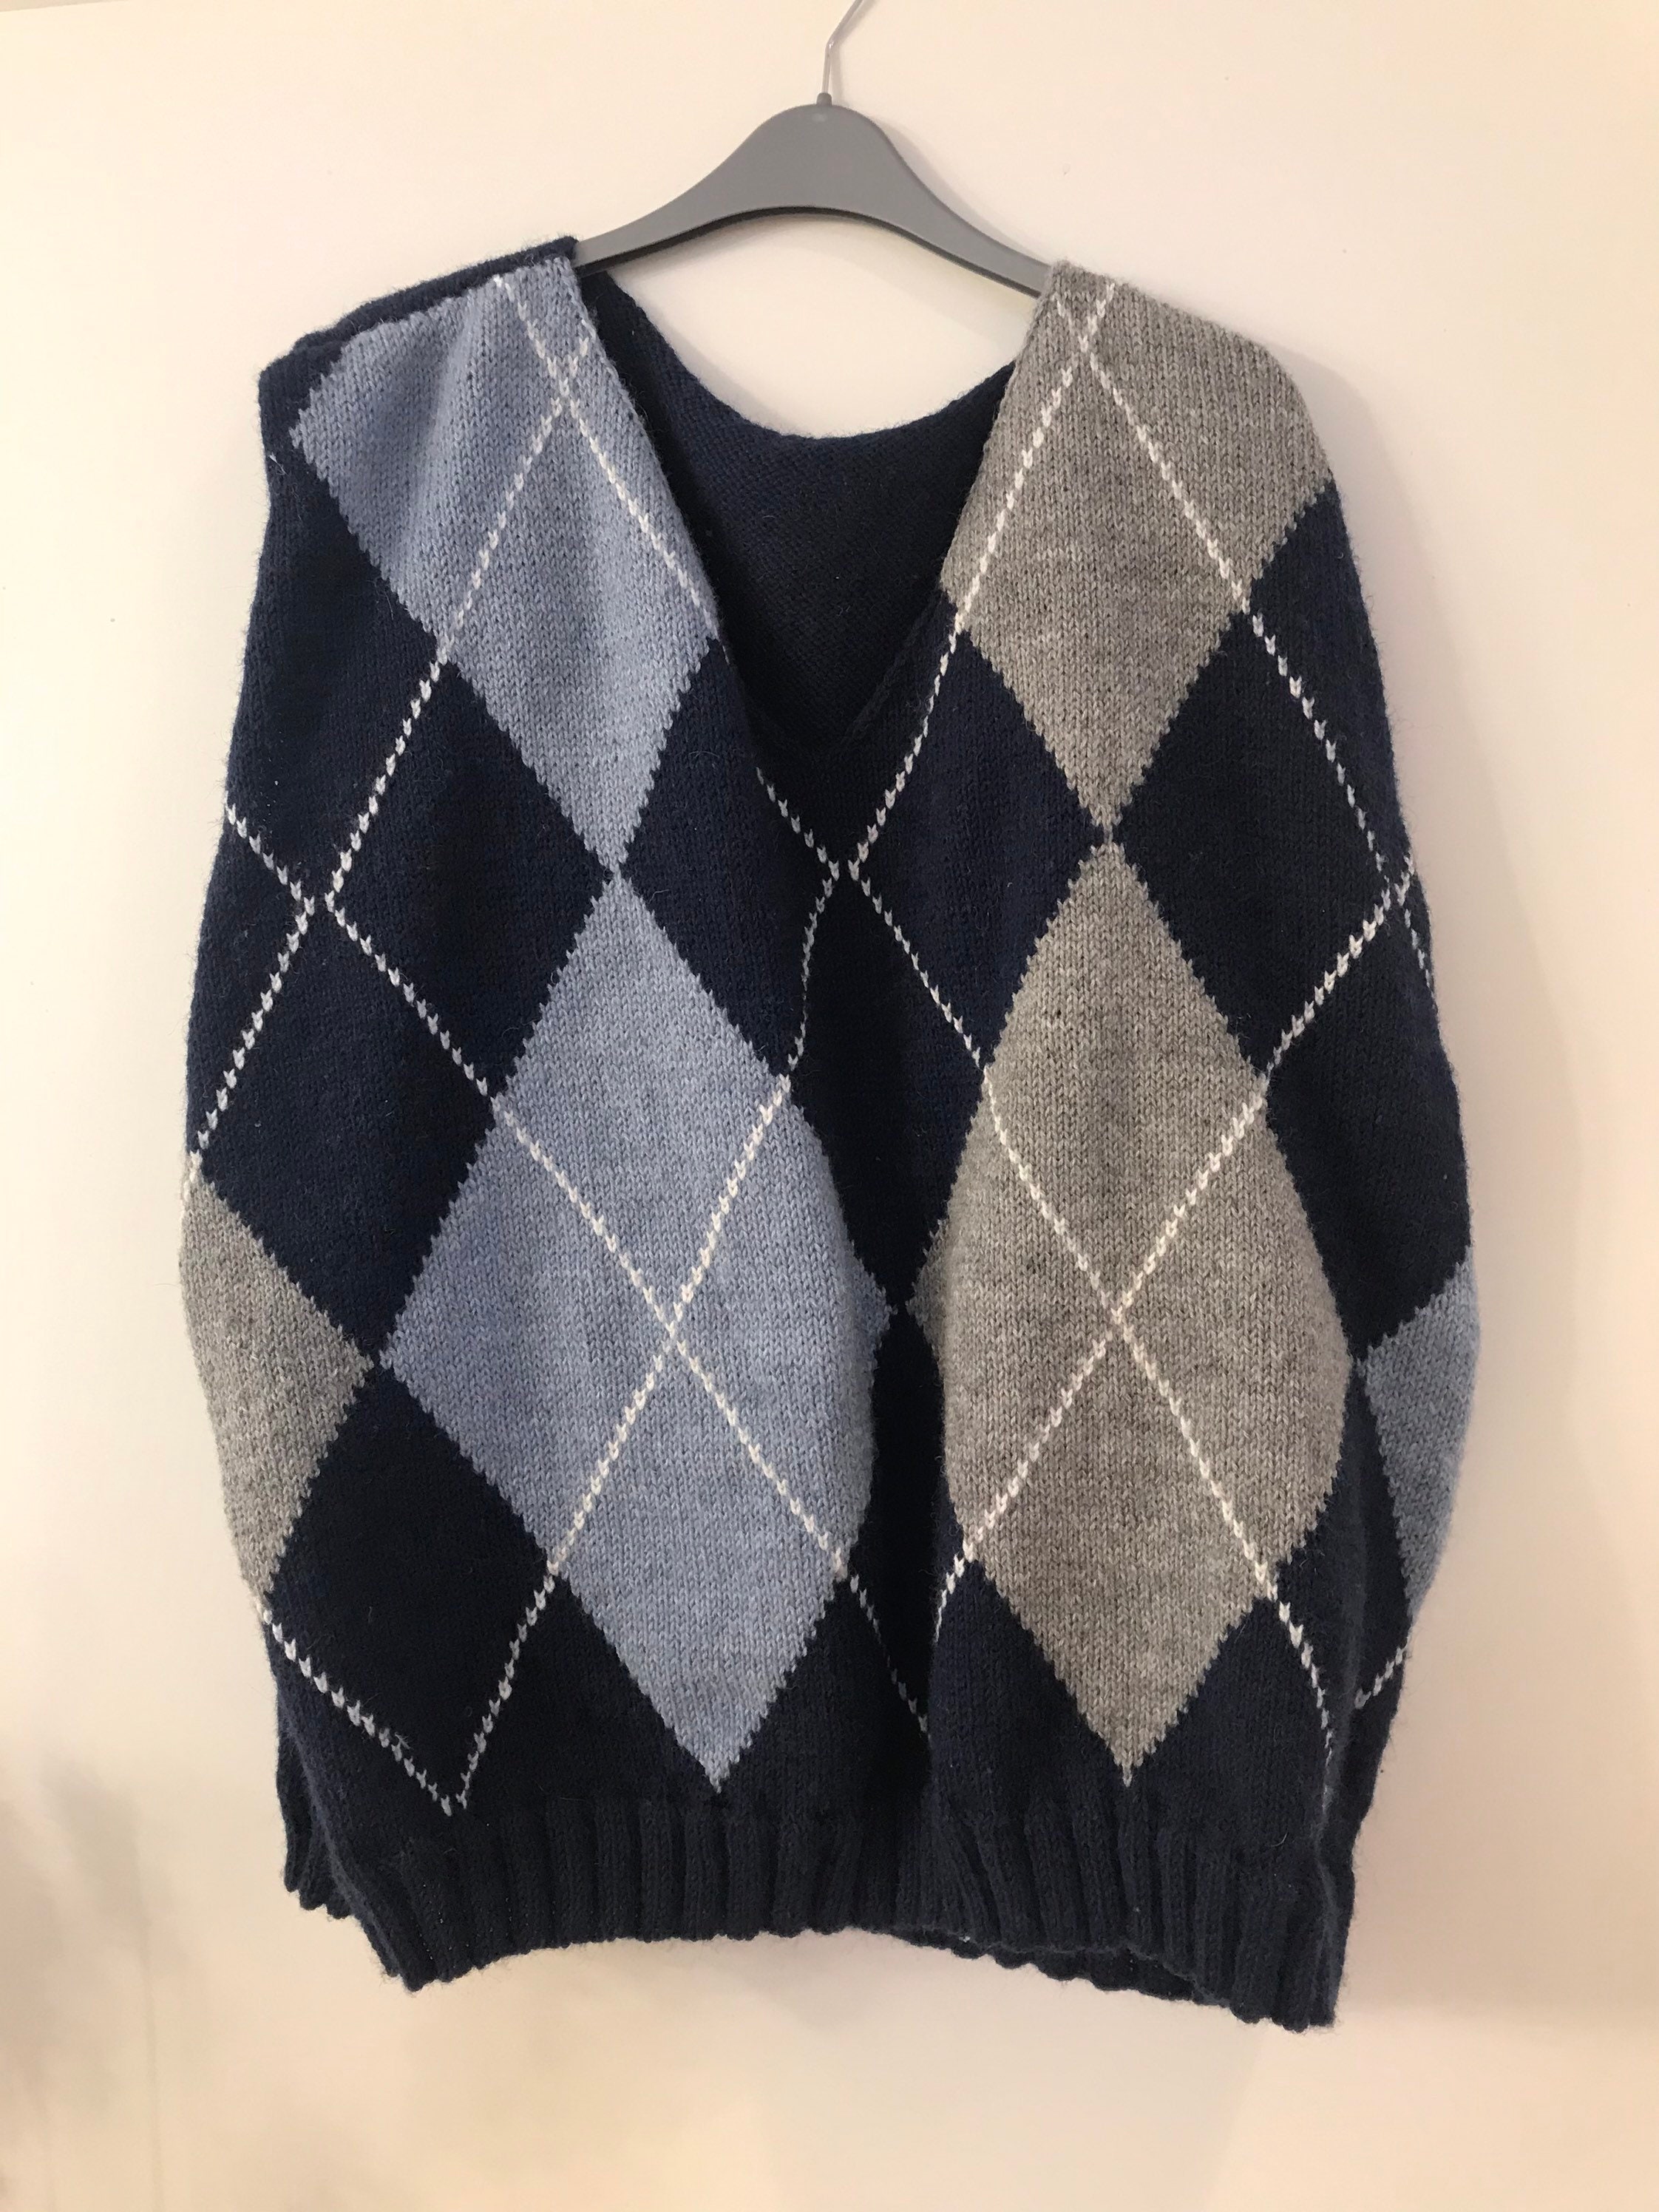 Handmade knitted argyle oversize sweater vest | Etsy